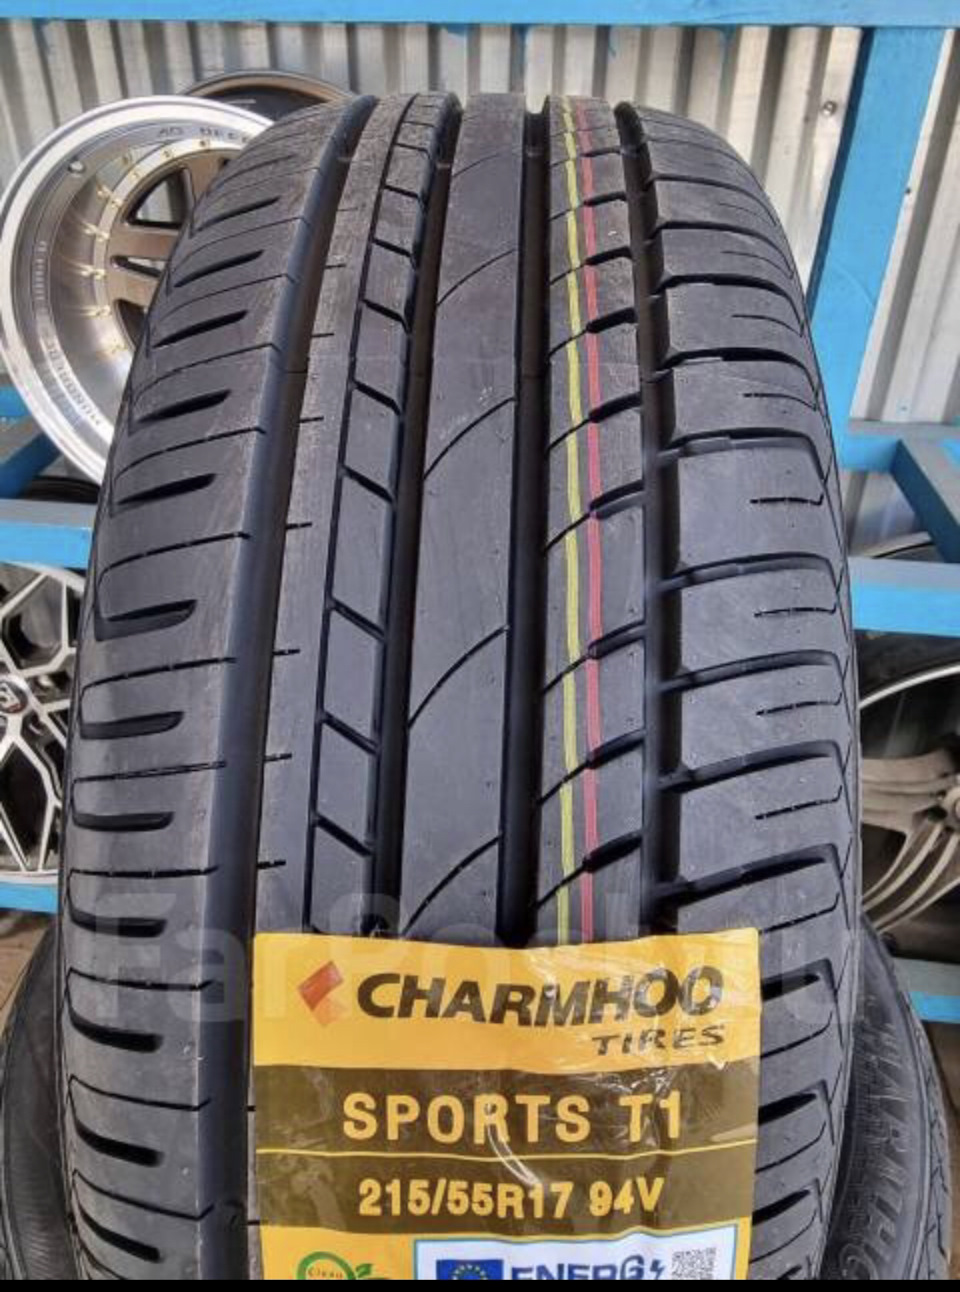 Charmhoo sport t1 отзывы. Charmhoo Sports t1 шины. 245/45zr17 Charmhoo XL Sports t1. Charmhoo 94w Sports t1 245/40/19. Charmhoo Touring ch01 215 60 16.